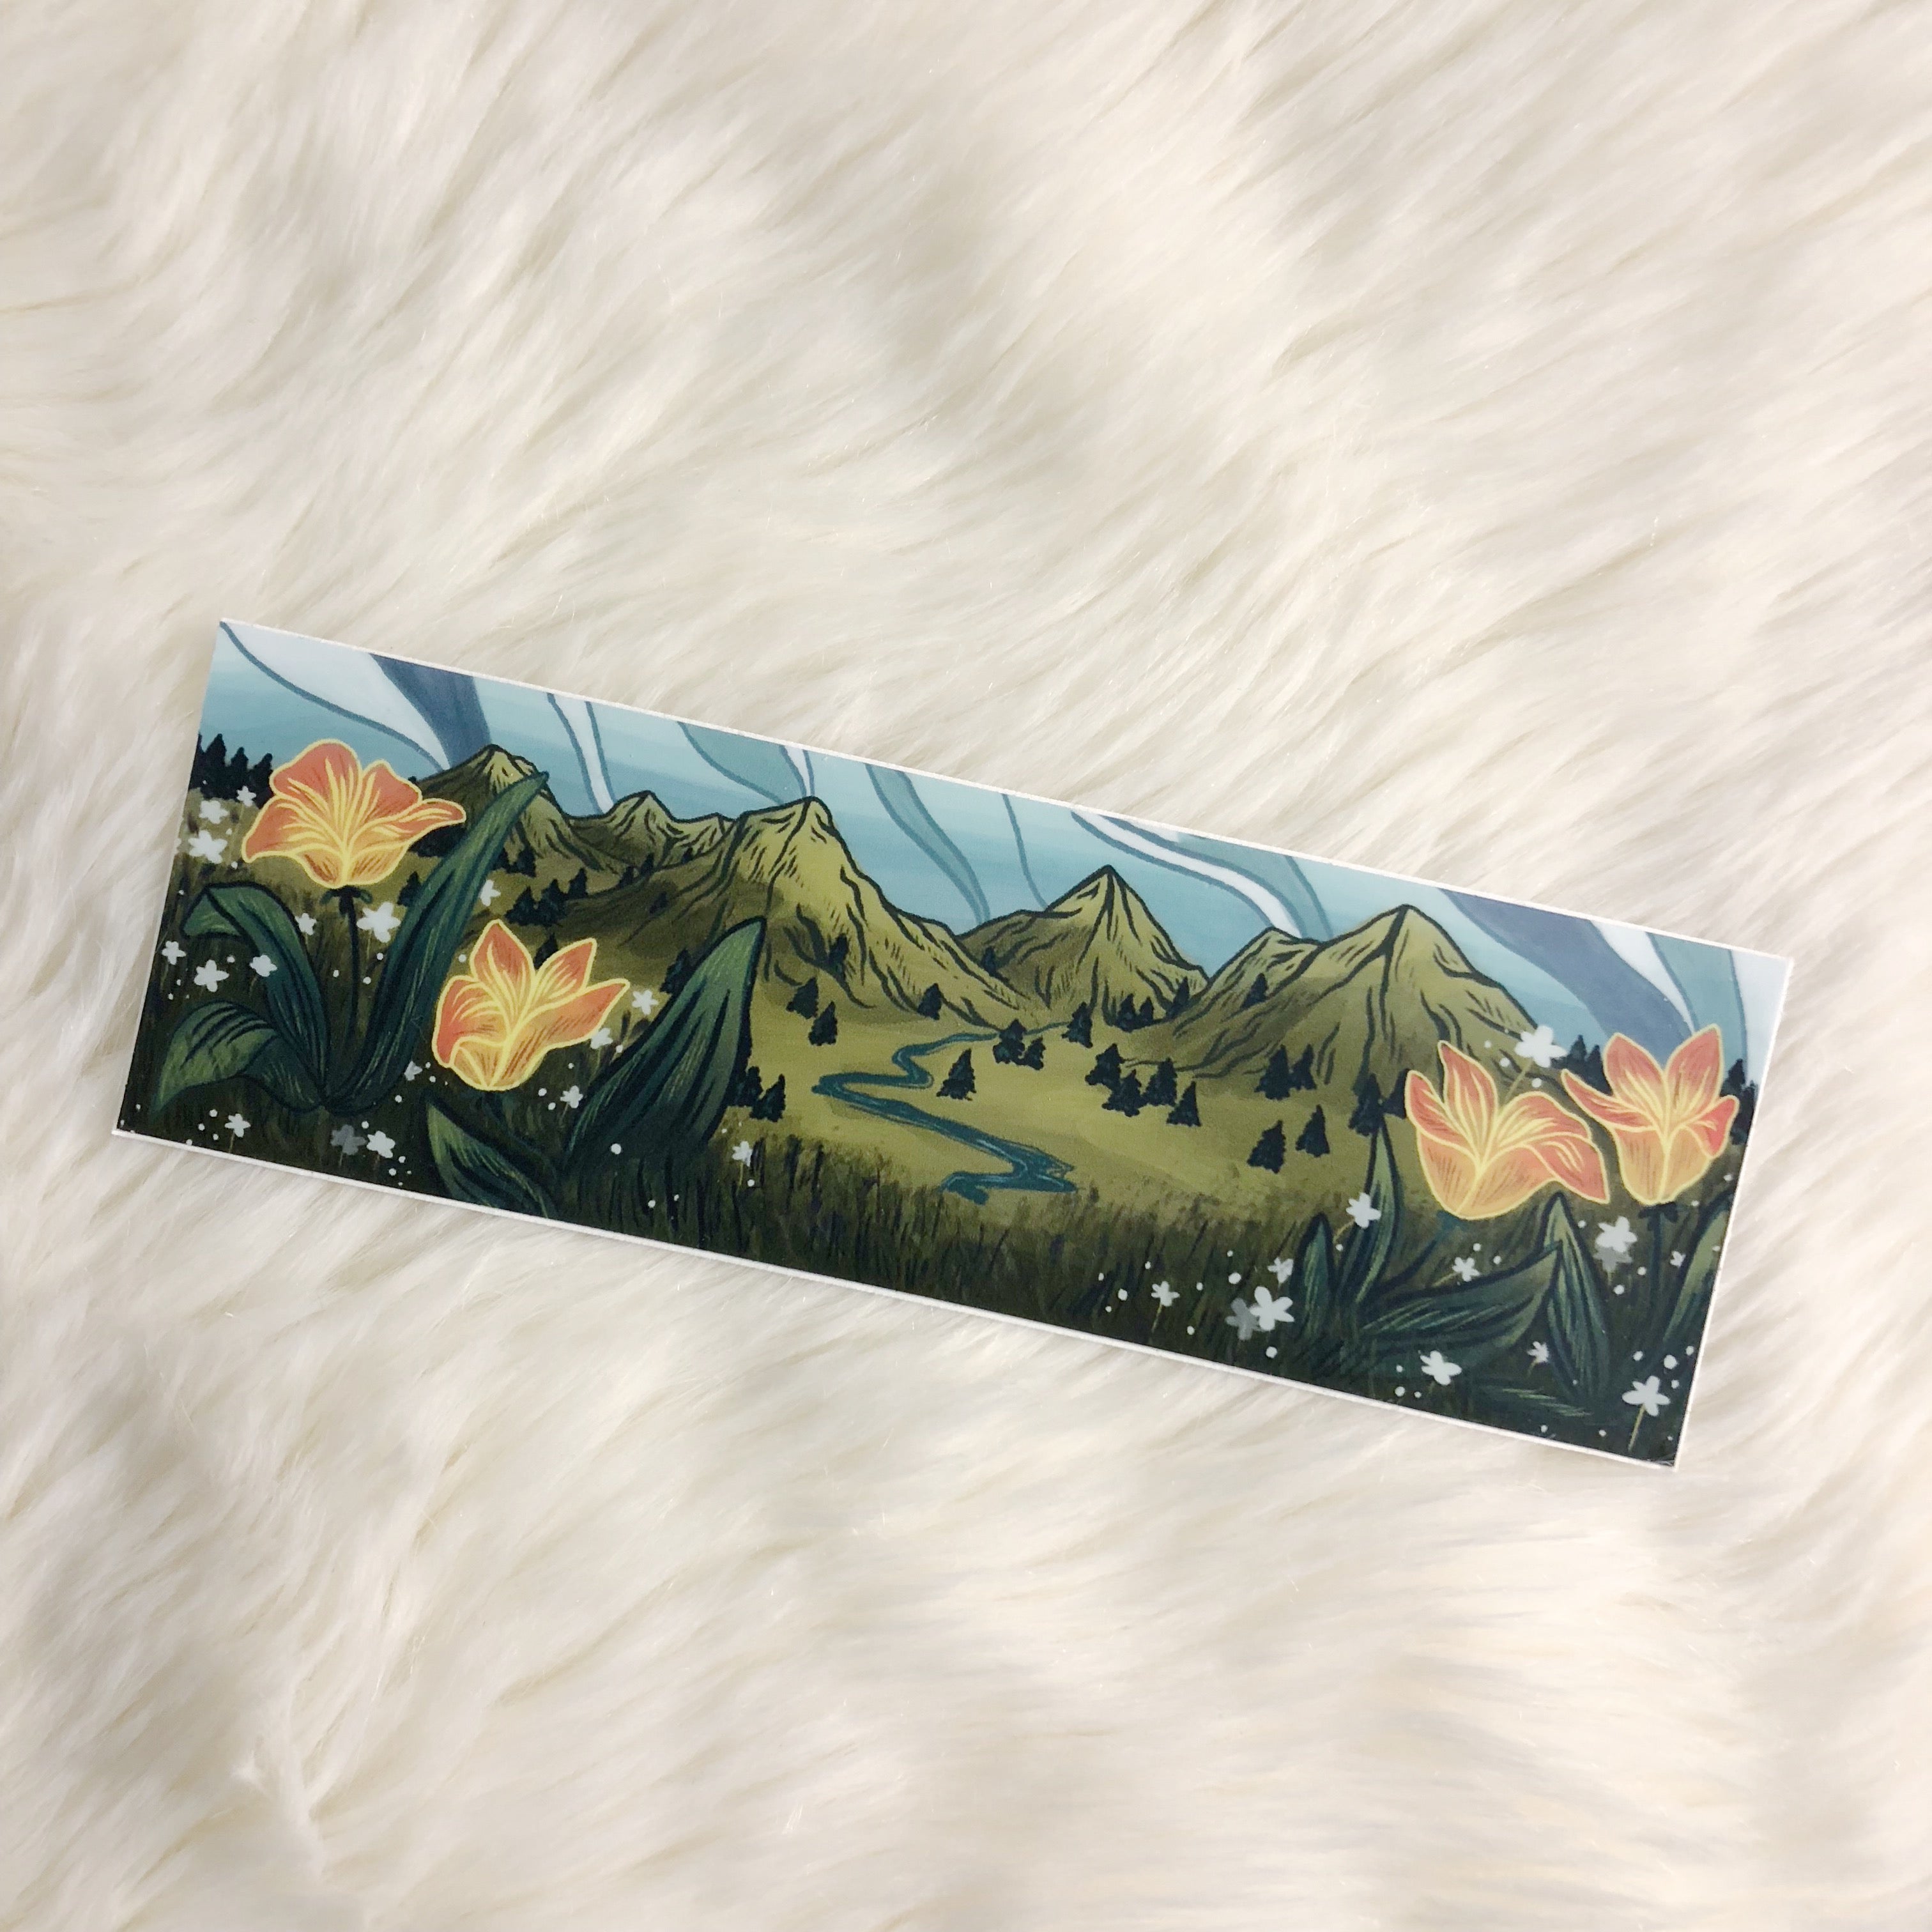 Green Mountains Sticker